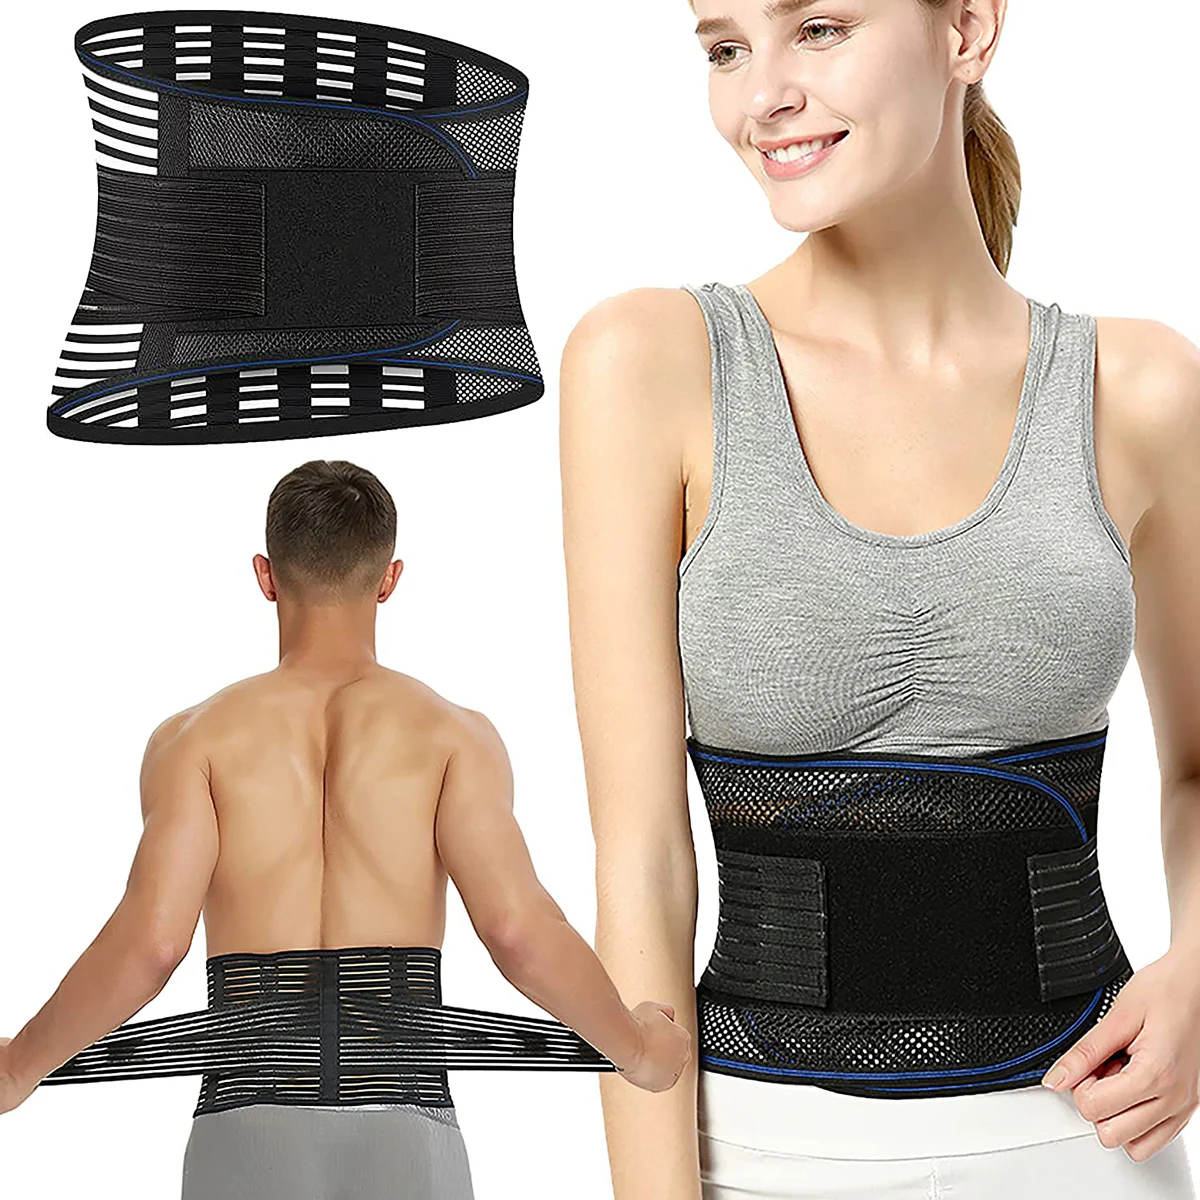 

Manufacturer Breathable Lower Back Spine Support Lumbar Waist Support Back Brace Belt for Herniated Disc, Sciatica, Scoliosis, Black